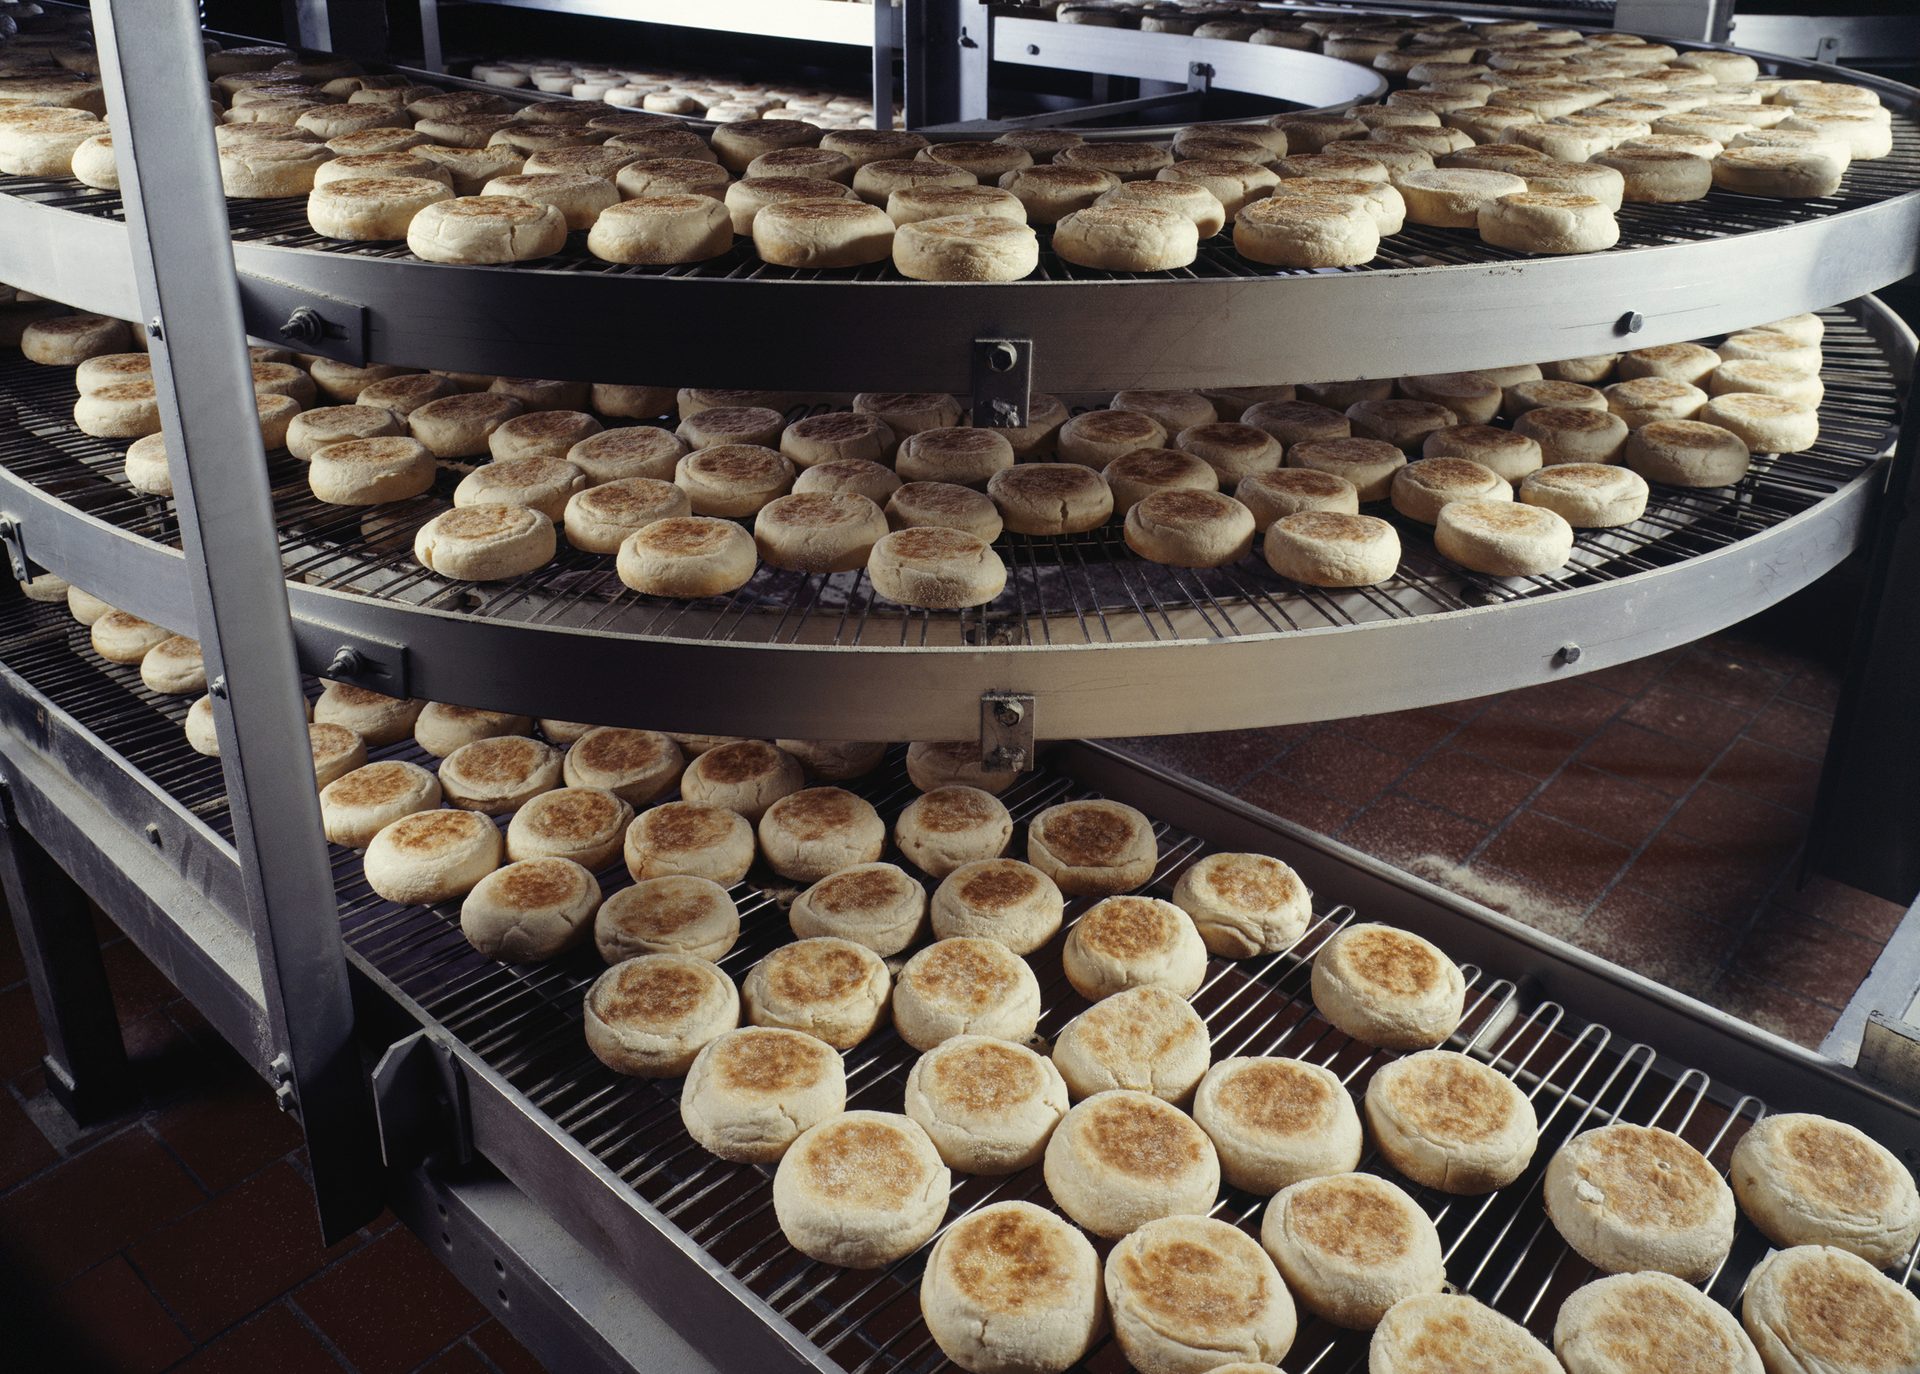 English muffins, Processing plant interior, Machinery, Belt, Conveyor